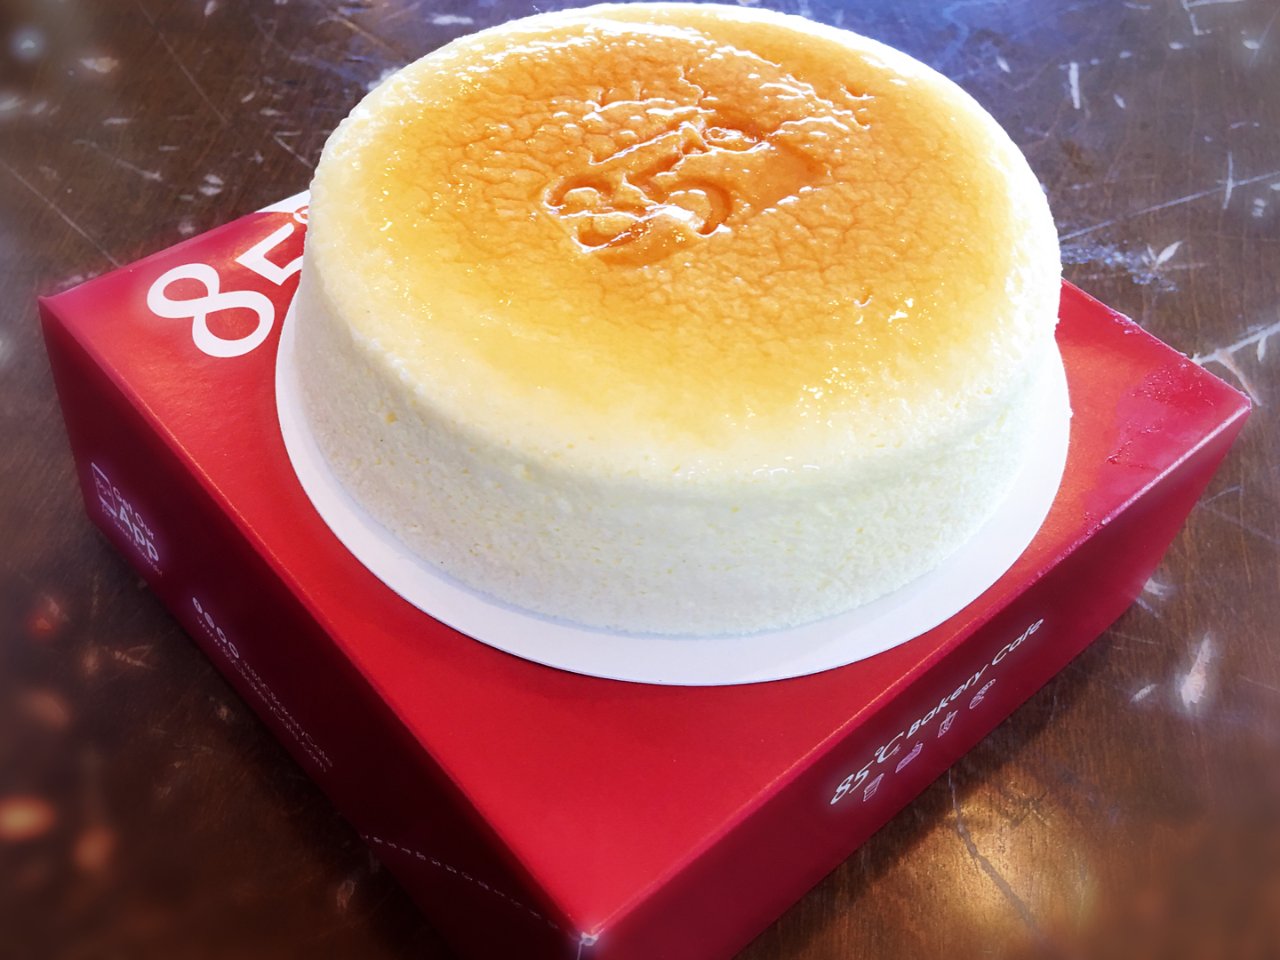 Soufflé cheesecake $4